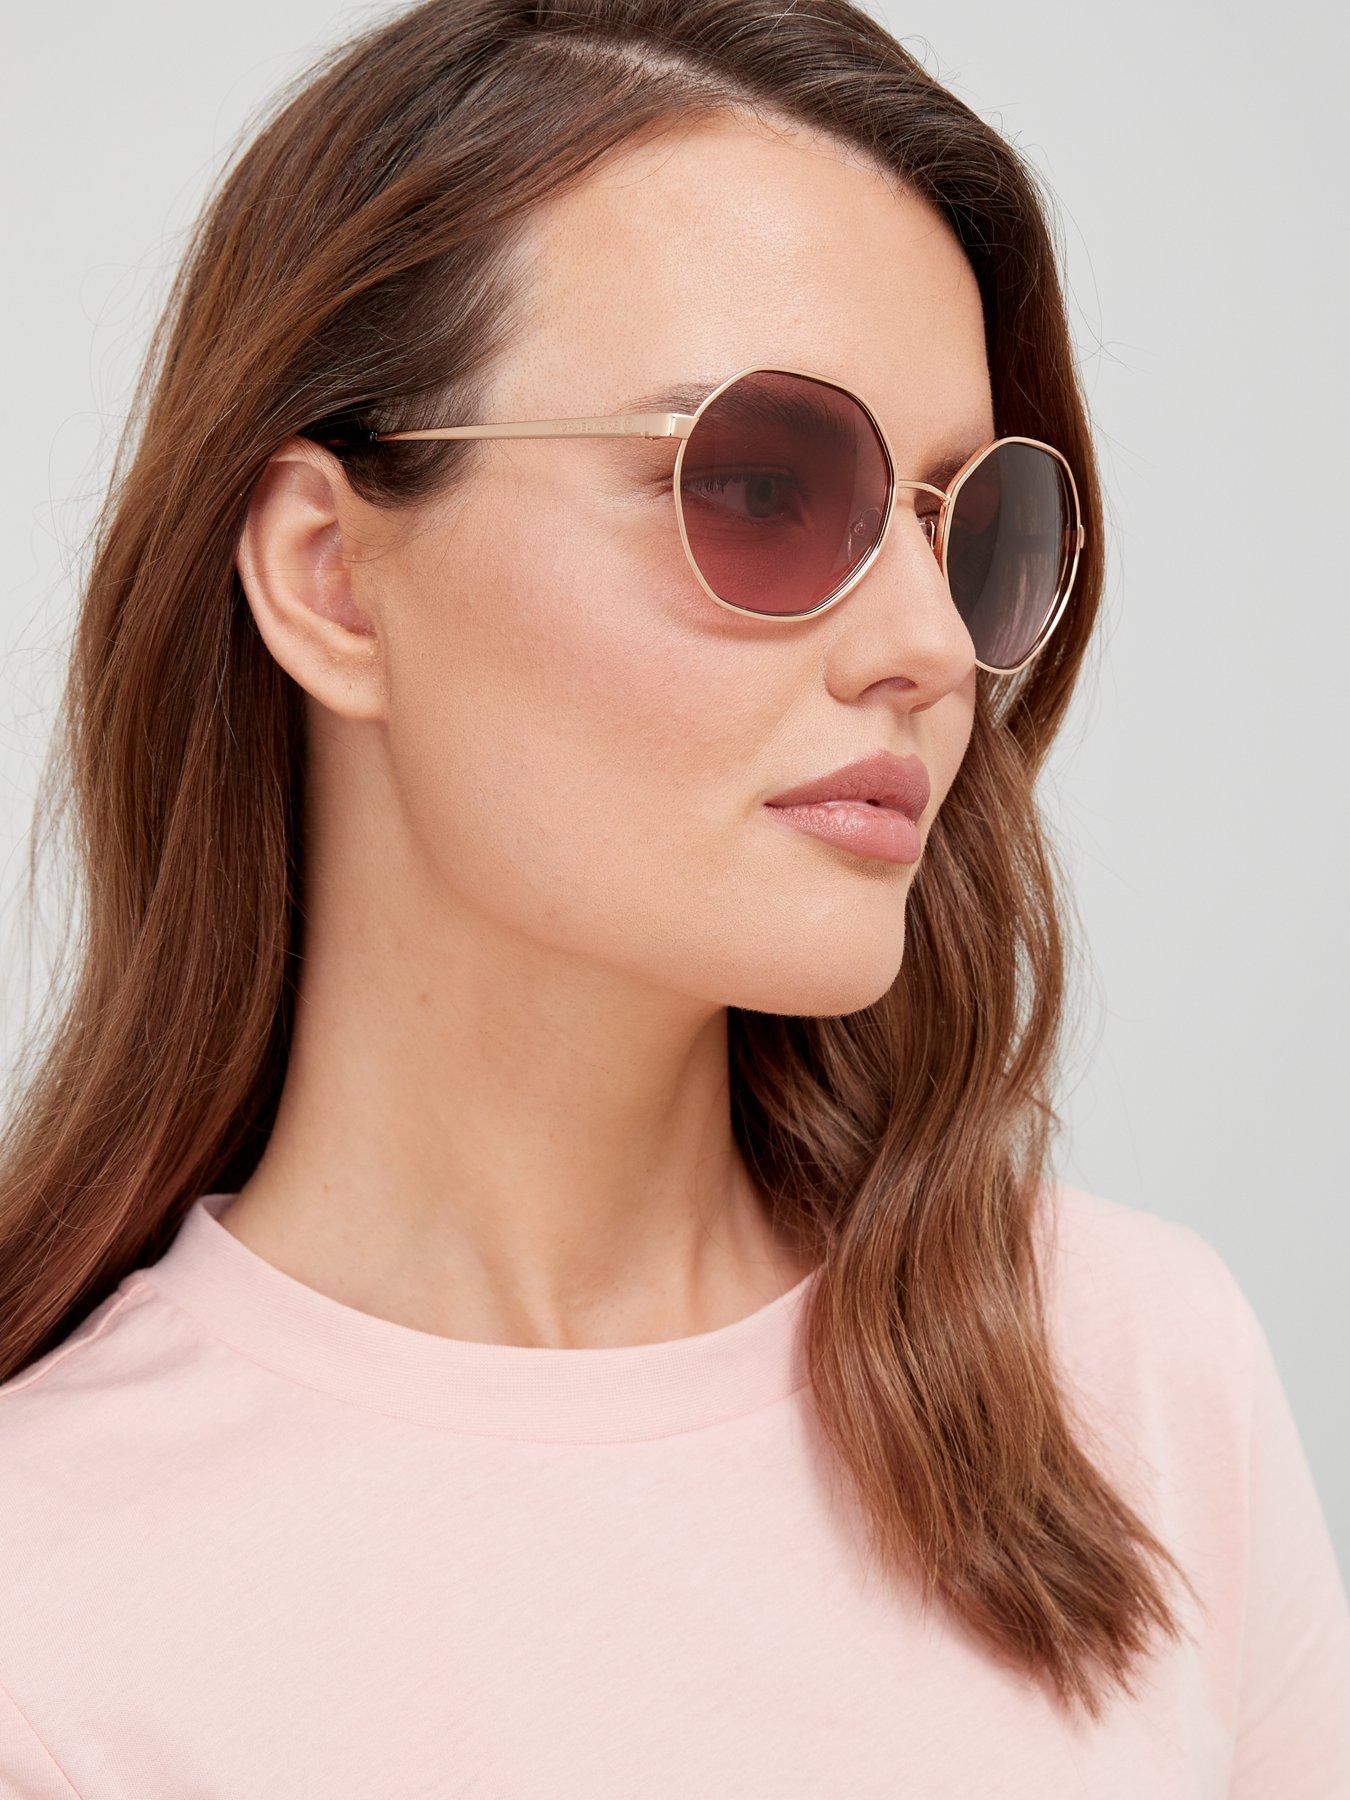 Accessories Round Sunglasses - Rose Gold